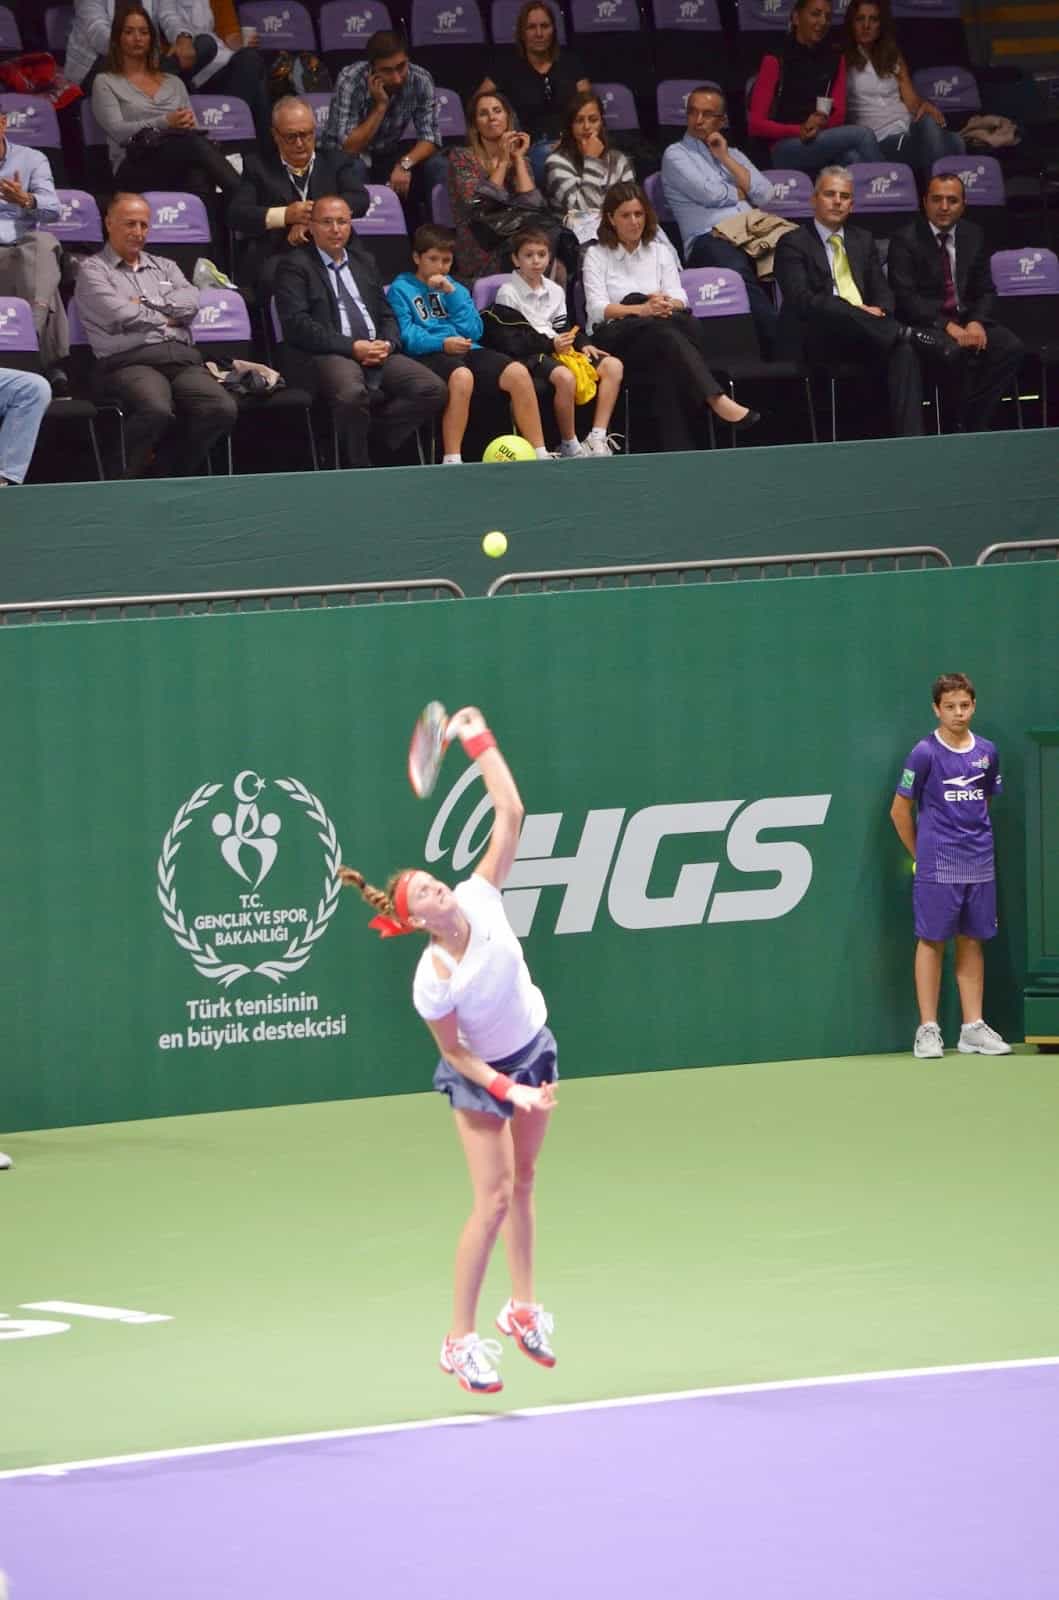 Petra Kvitová in the 2012 WTA Championships at the Sinan Erdem Spor Salonu in Bakırköy, Istanbul, Turkey